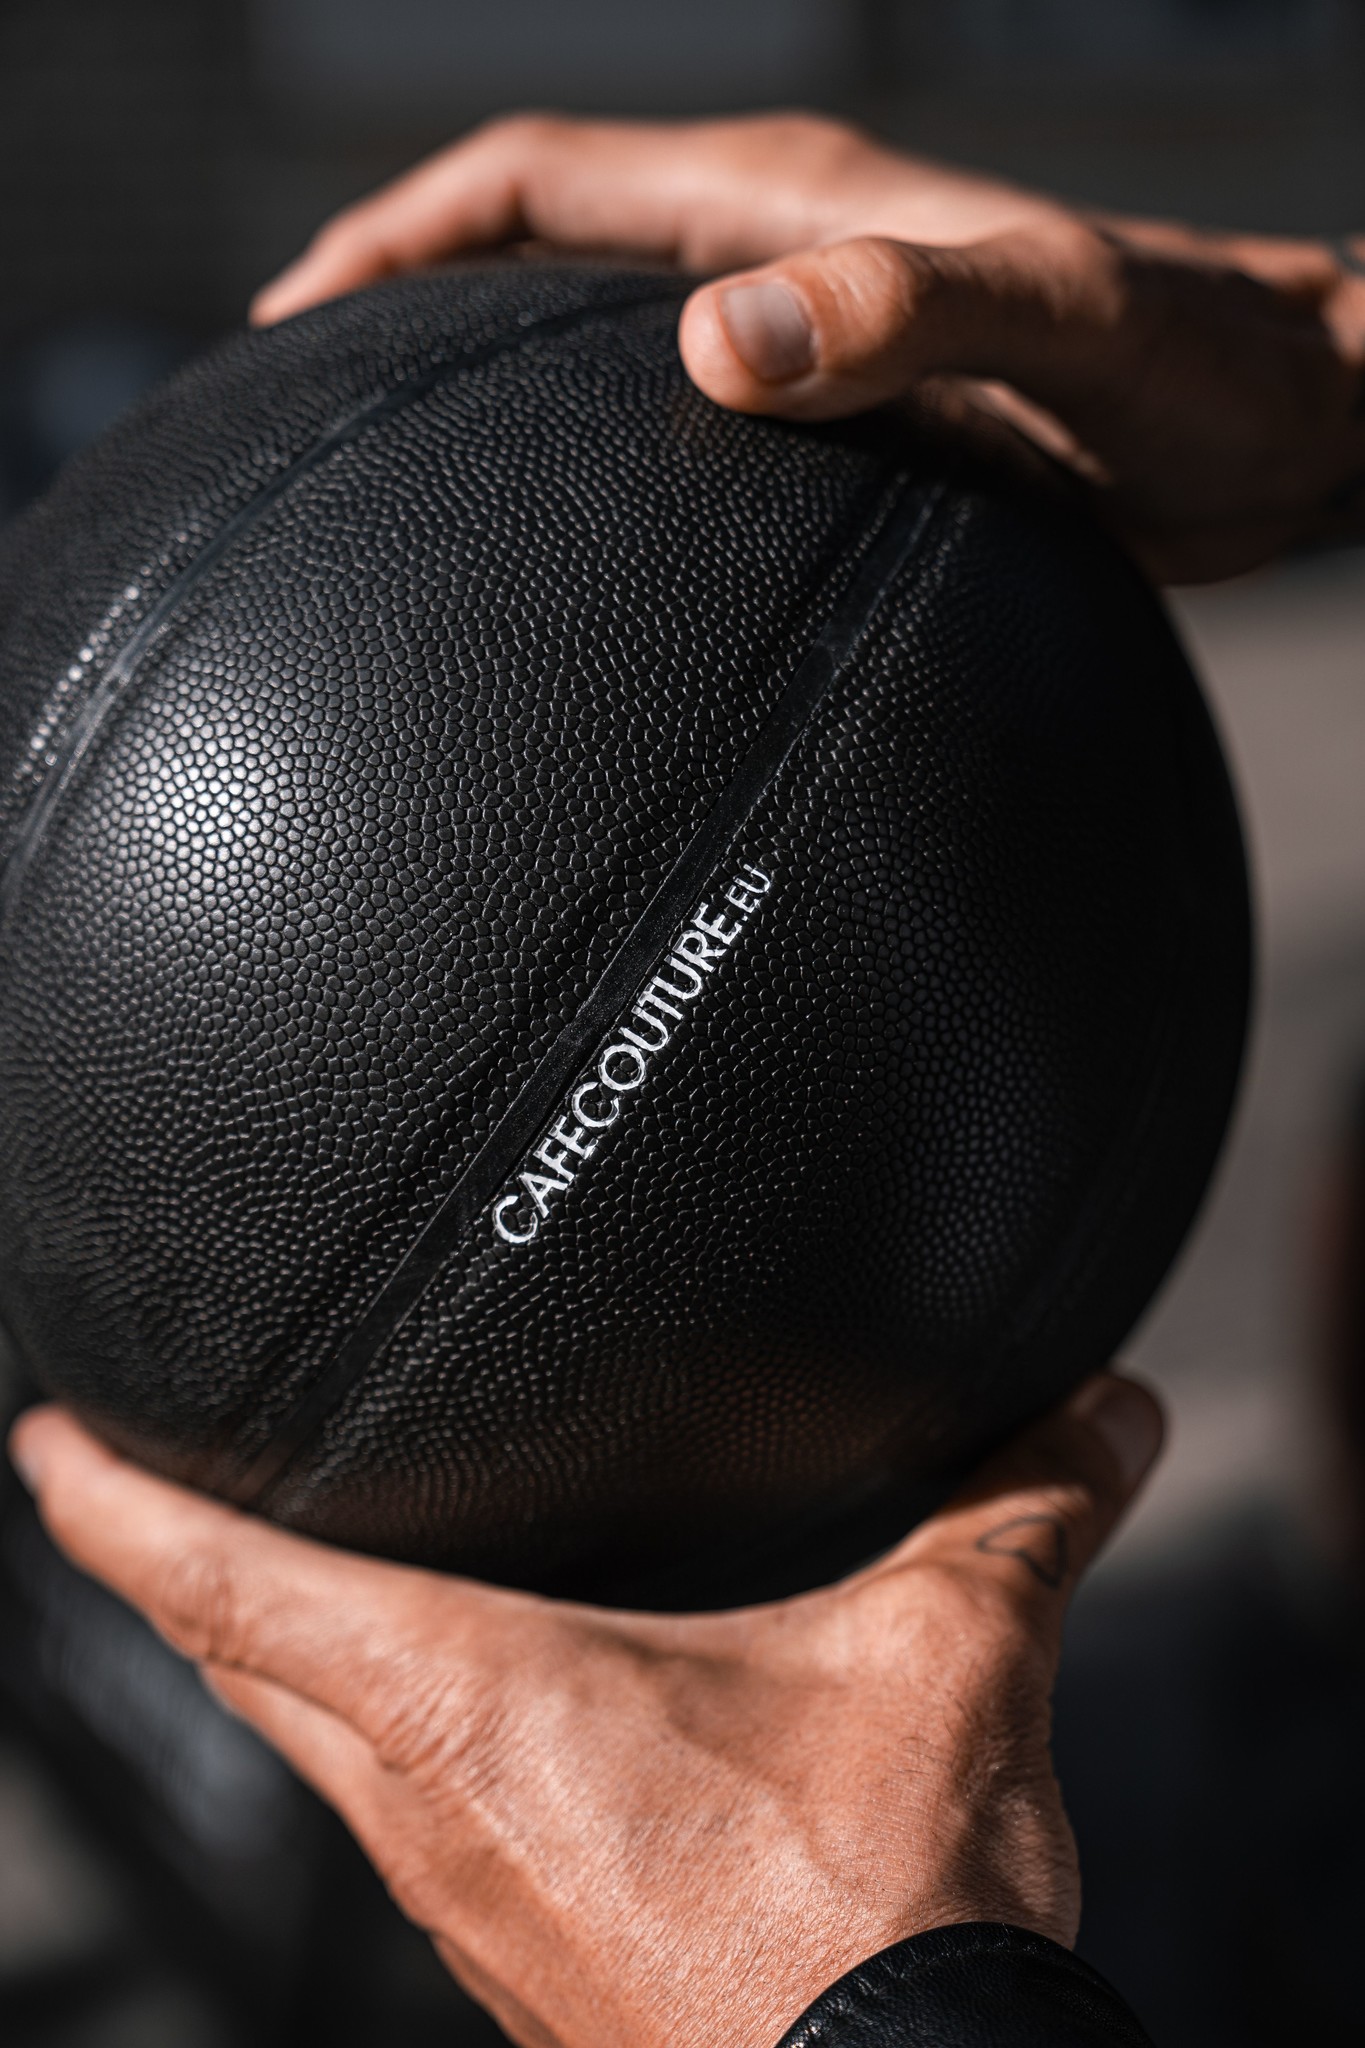 Nothing beats Love basketbal (black - semi leather)